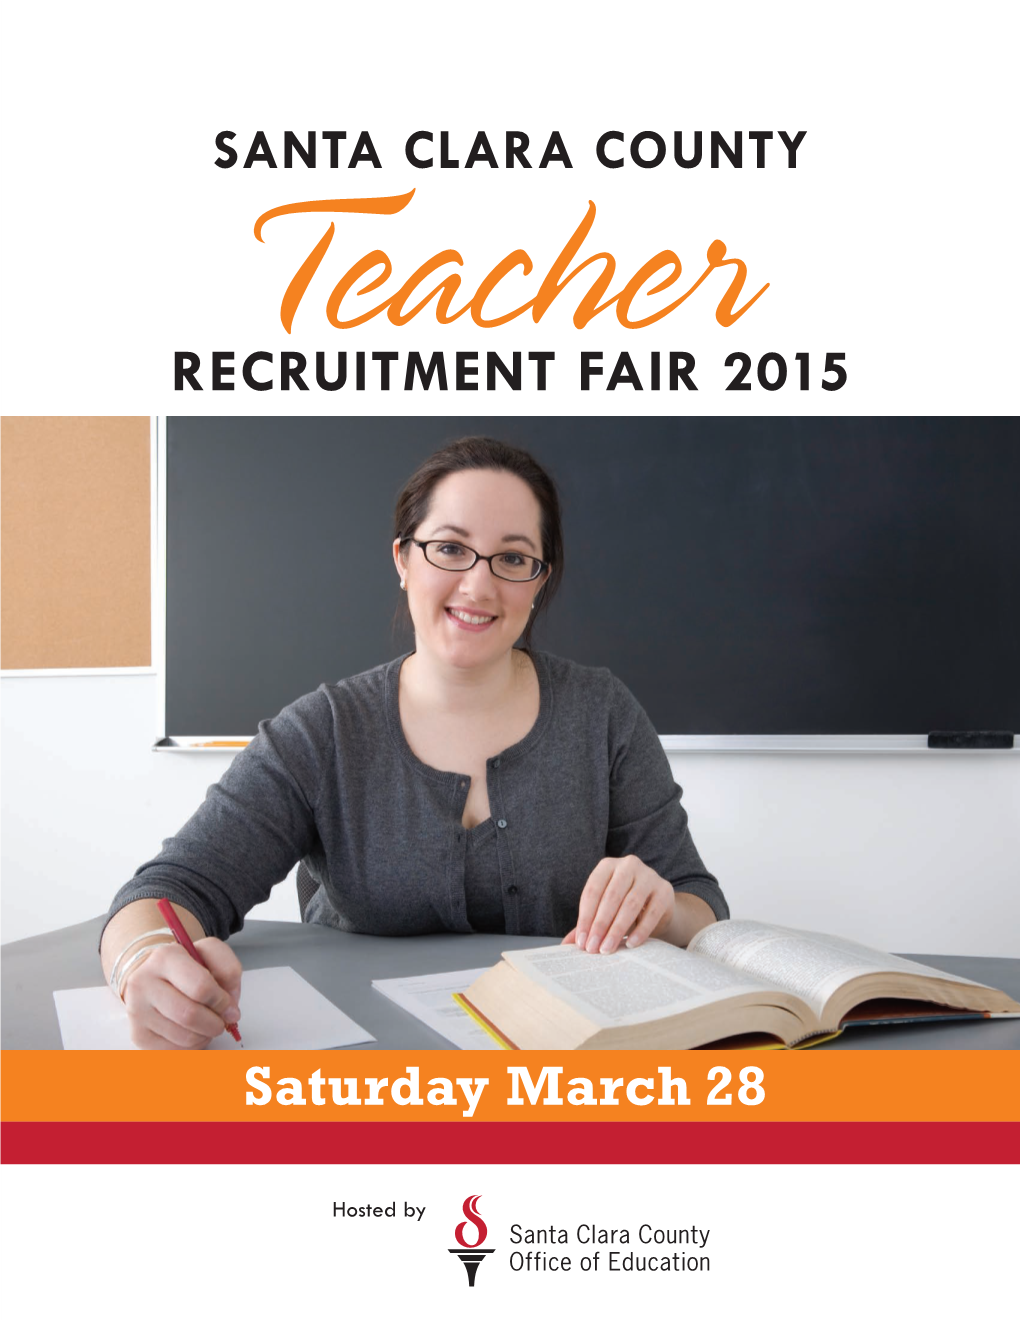 Recruitment Fair 2015